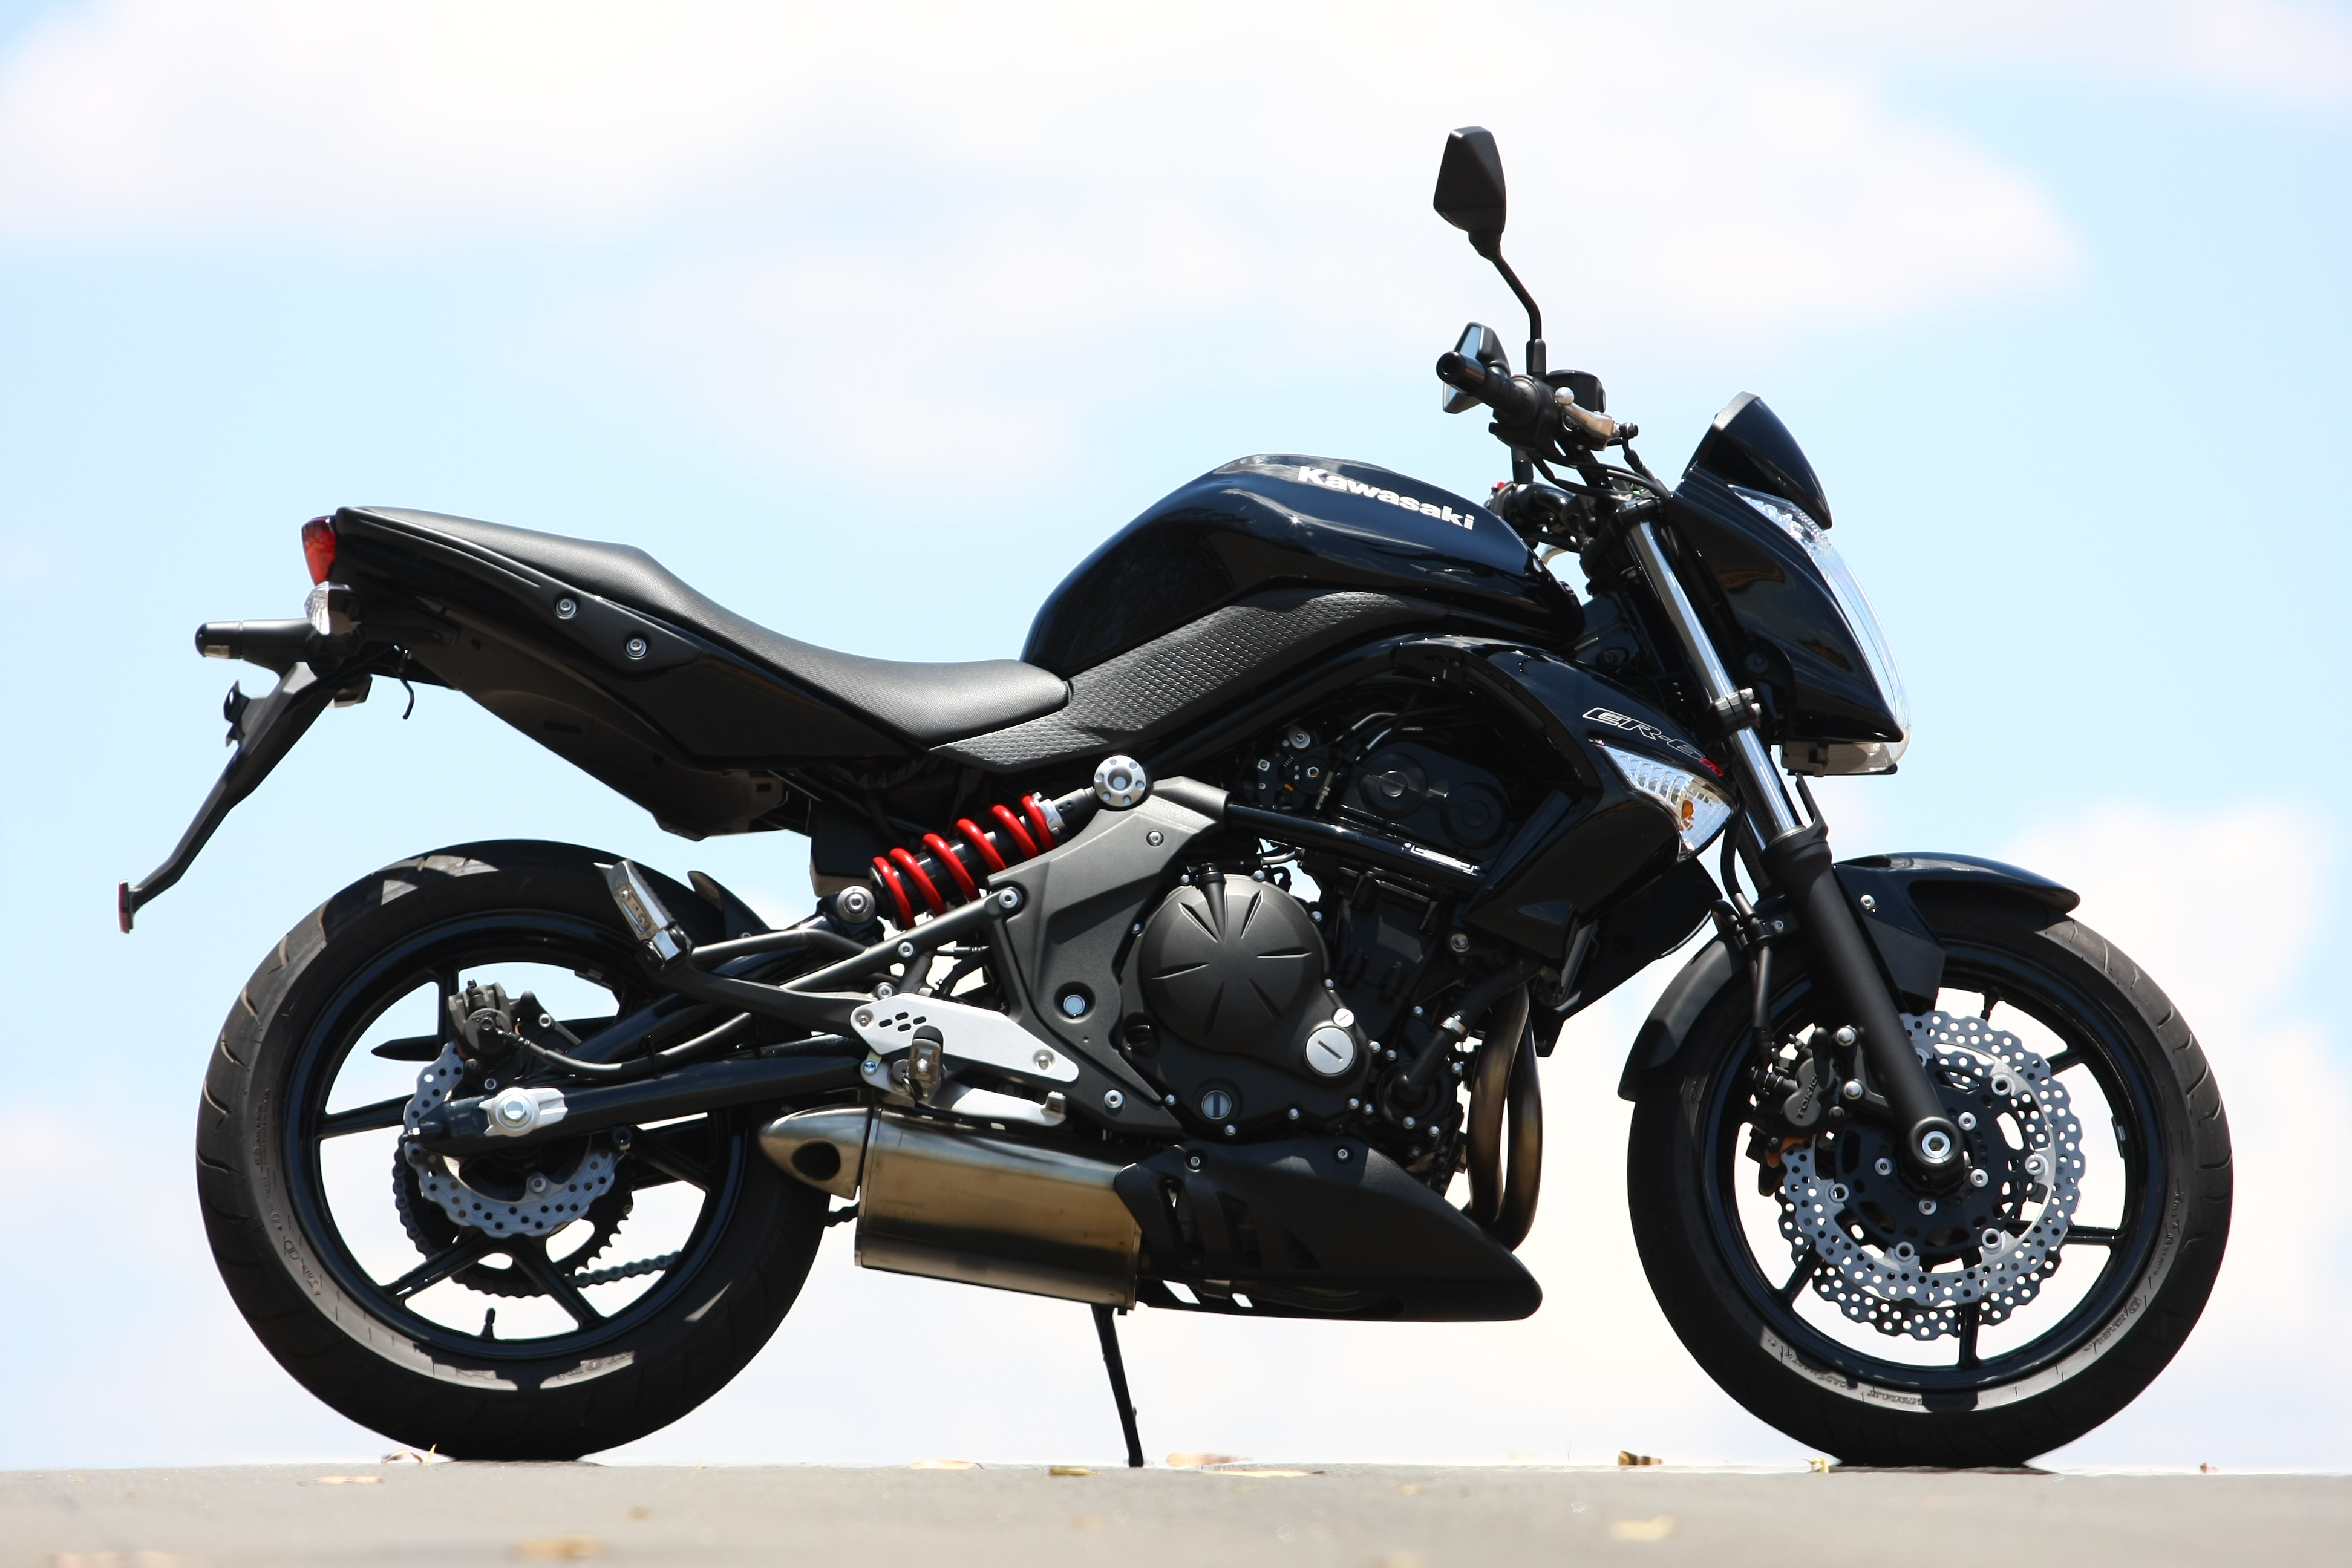 Top Motorcycle & Review: 2010 Kawasaki ER-6n